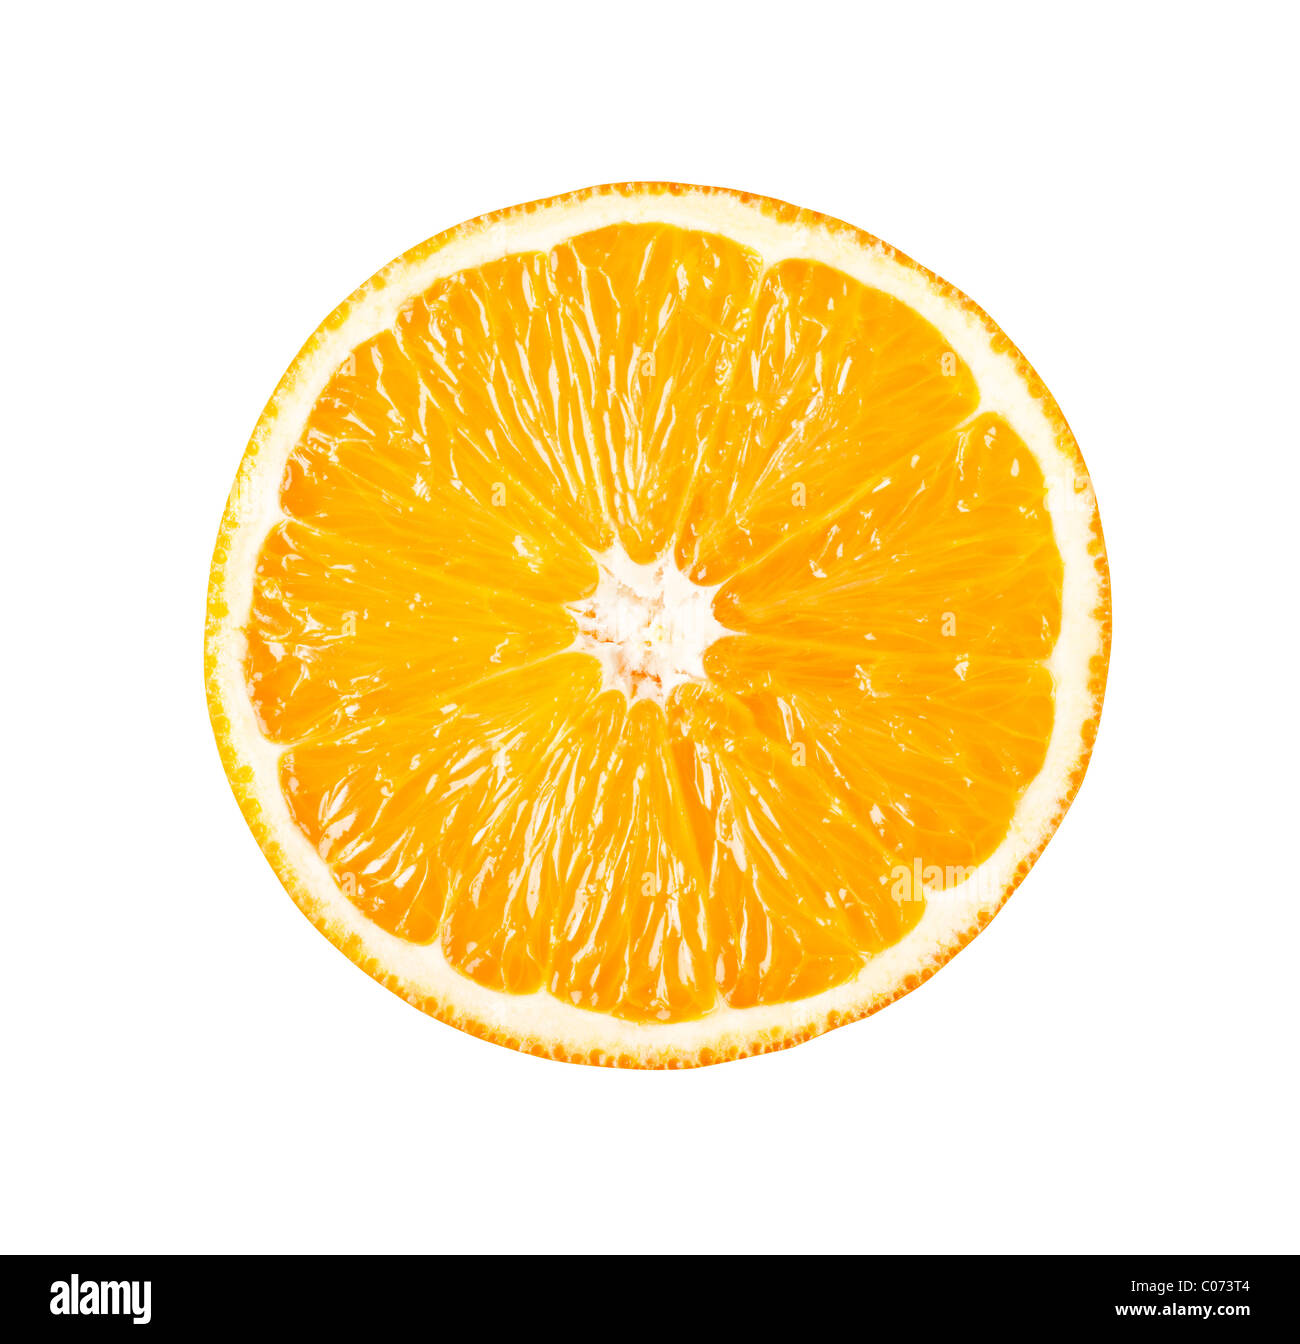 Perfectly round orange sliced in half isolated on white background Stock Photo